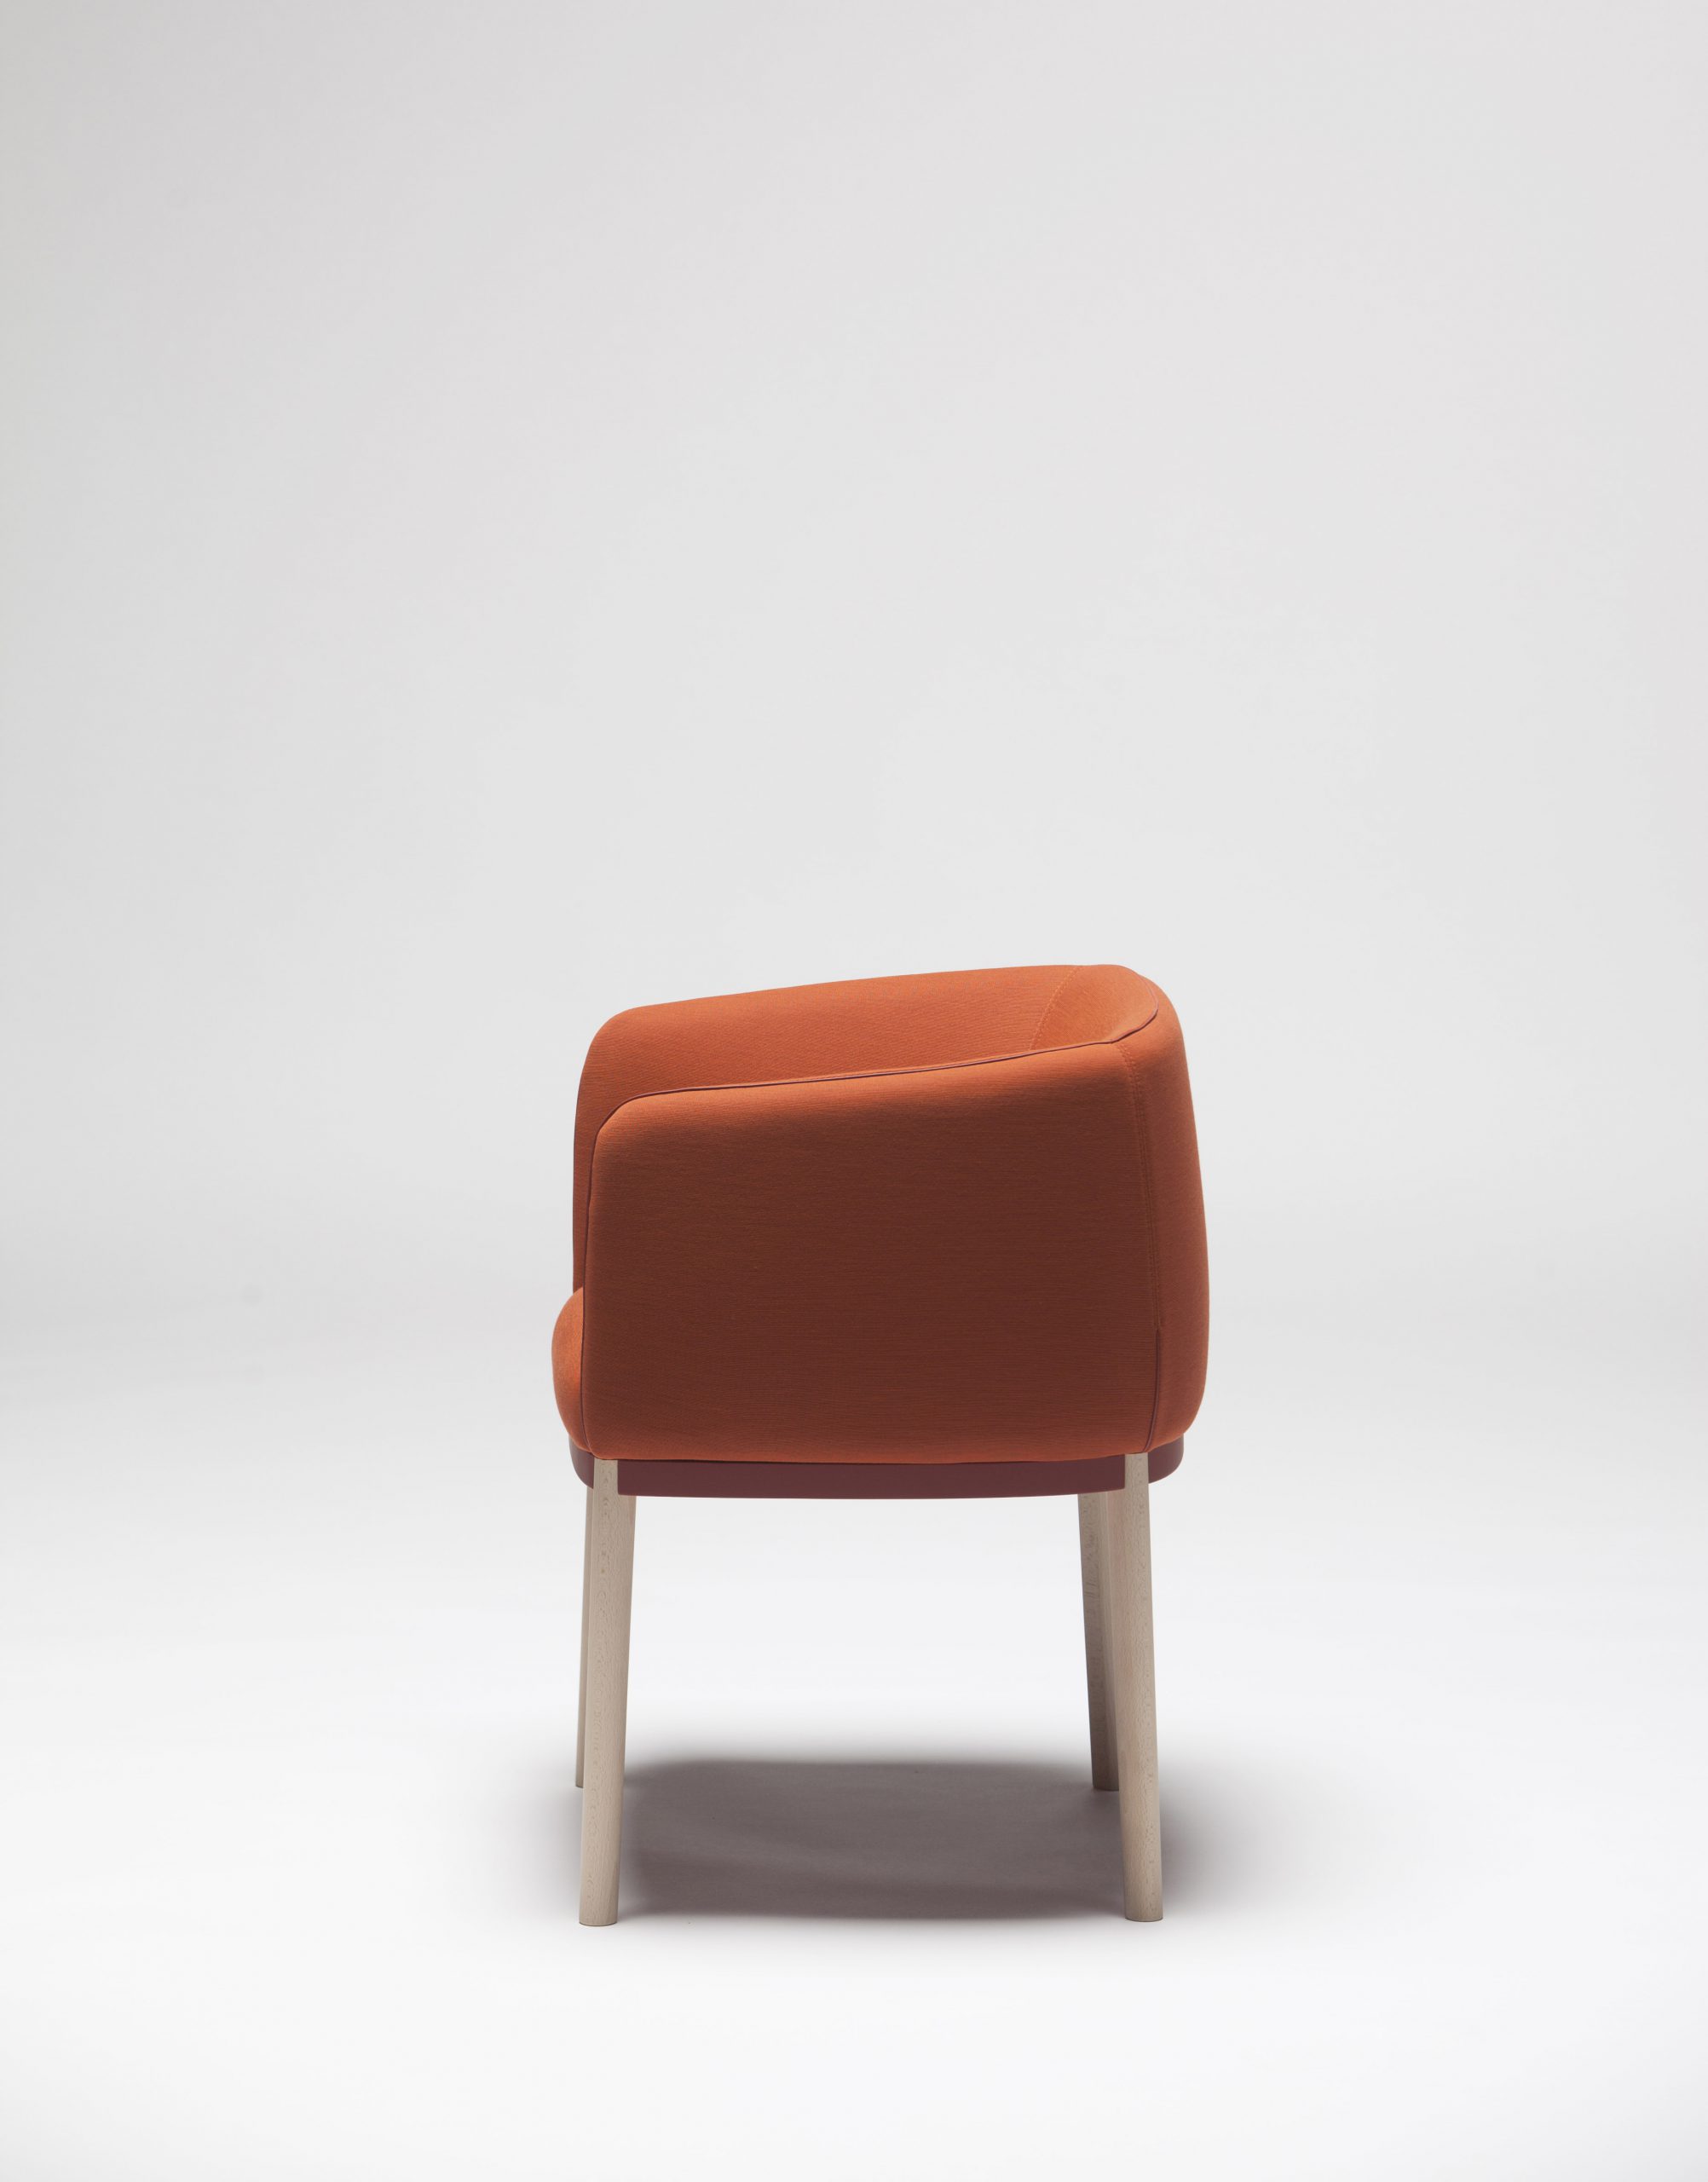 Cape armchair by Debiasi Sandri for Tekhne